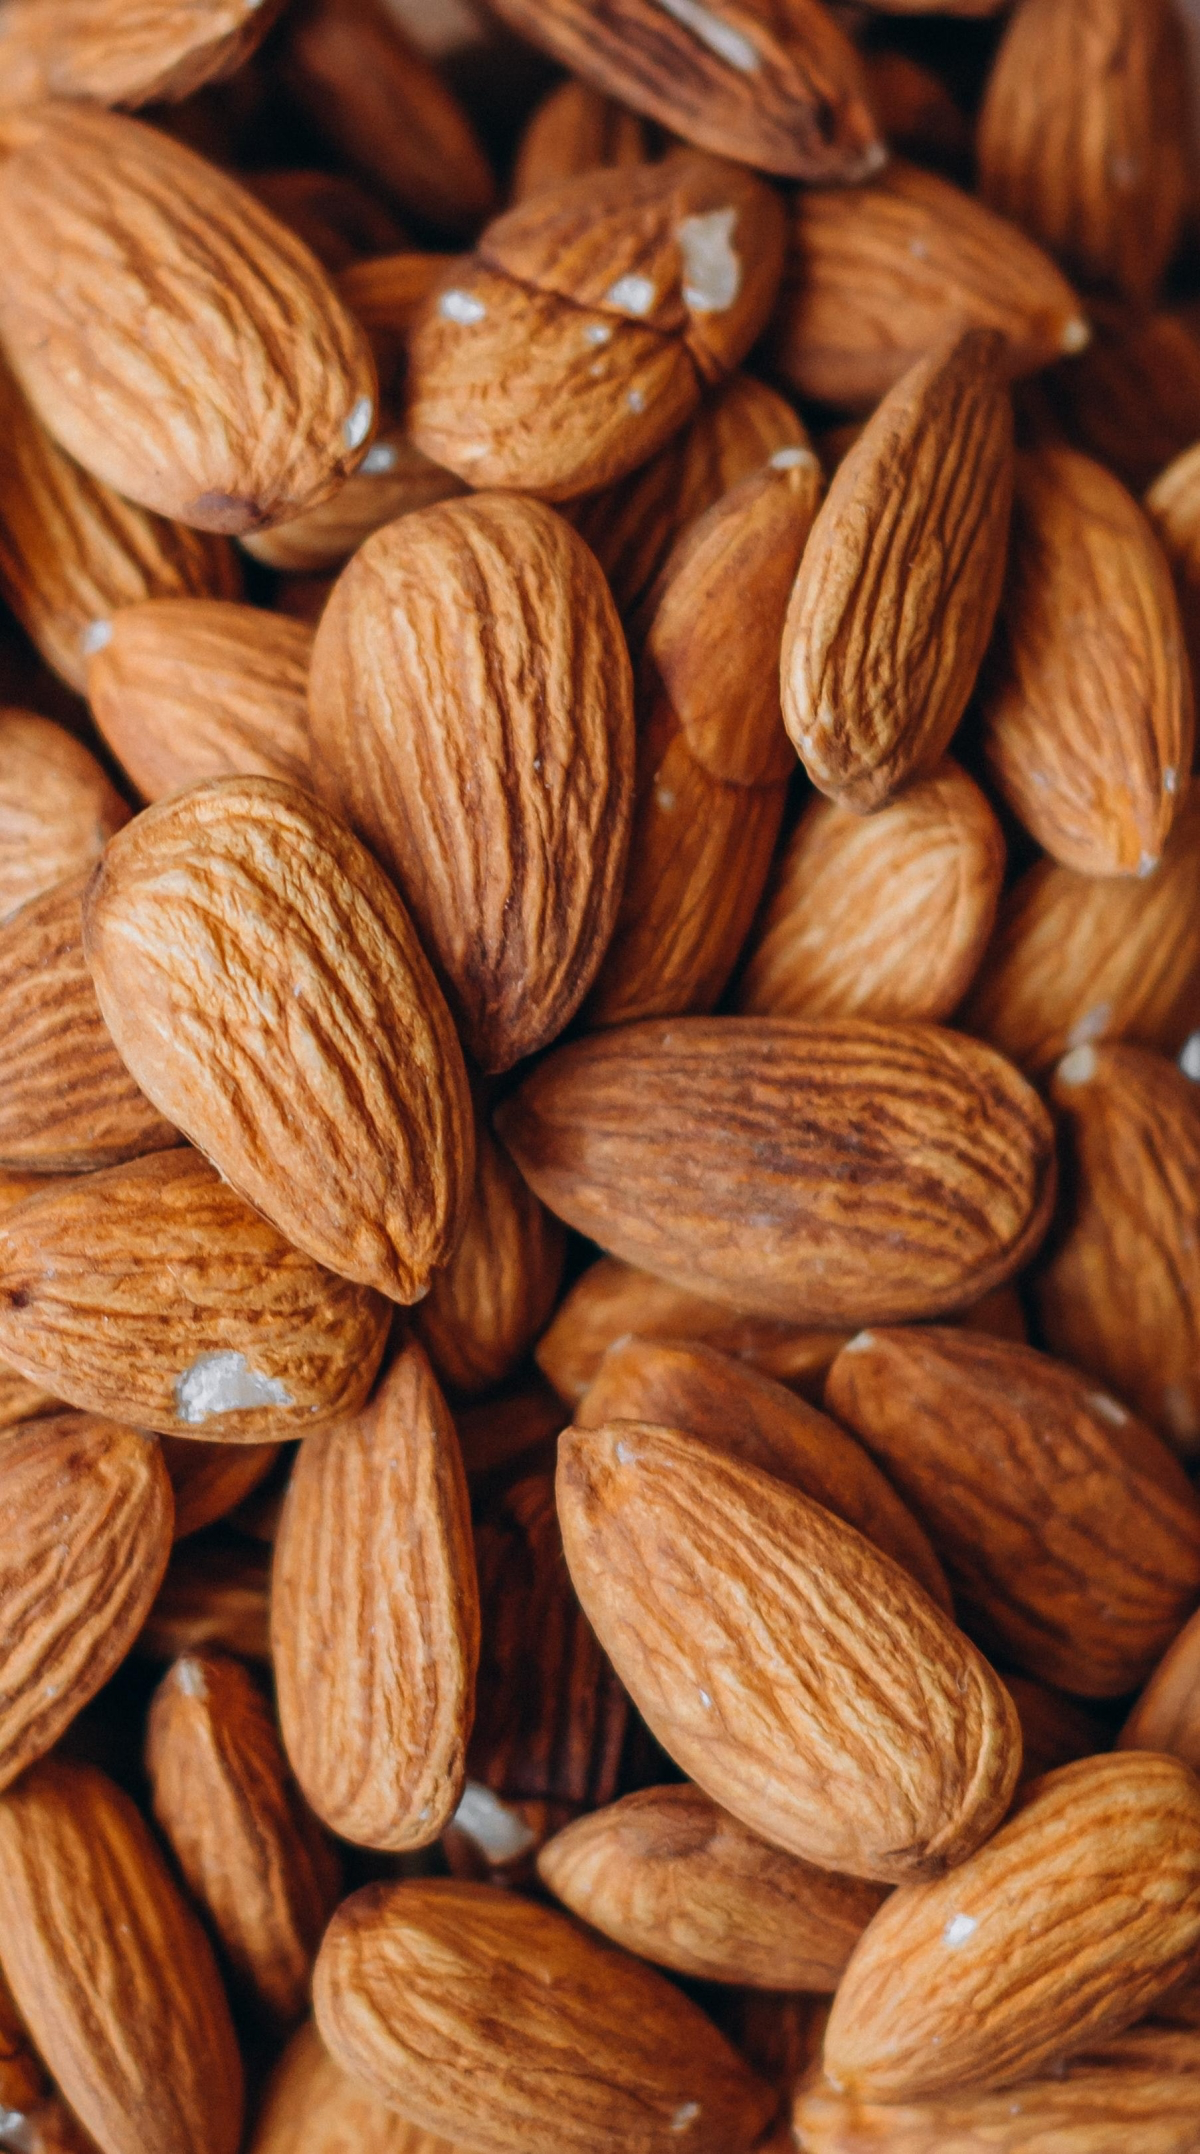 5 benefits of almonds